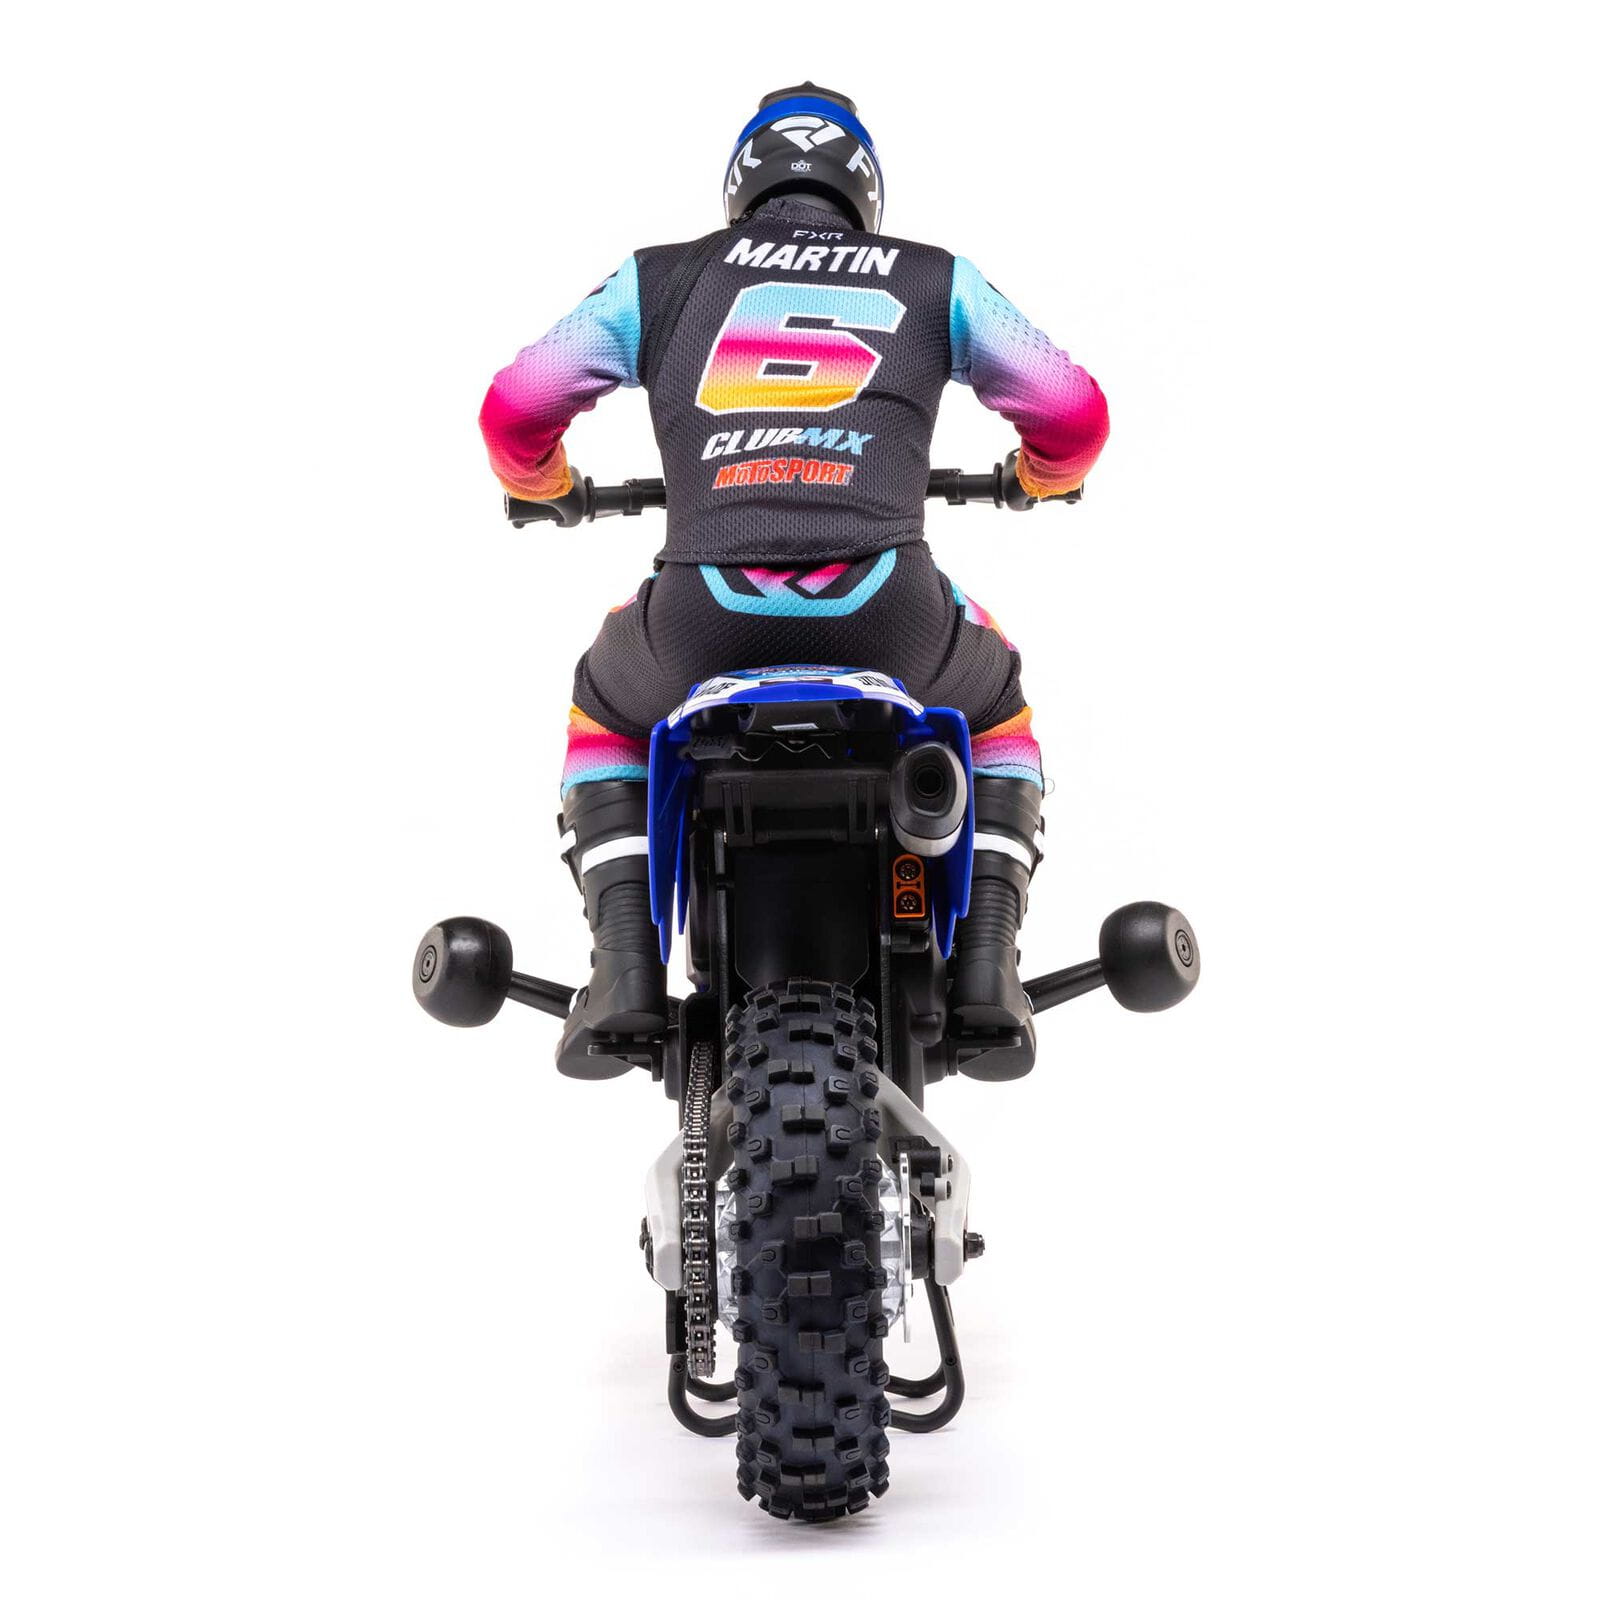 Losi Motocross RC Motorrad Promoto MX 1:4 RTR ClubMX Combo